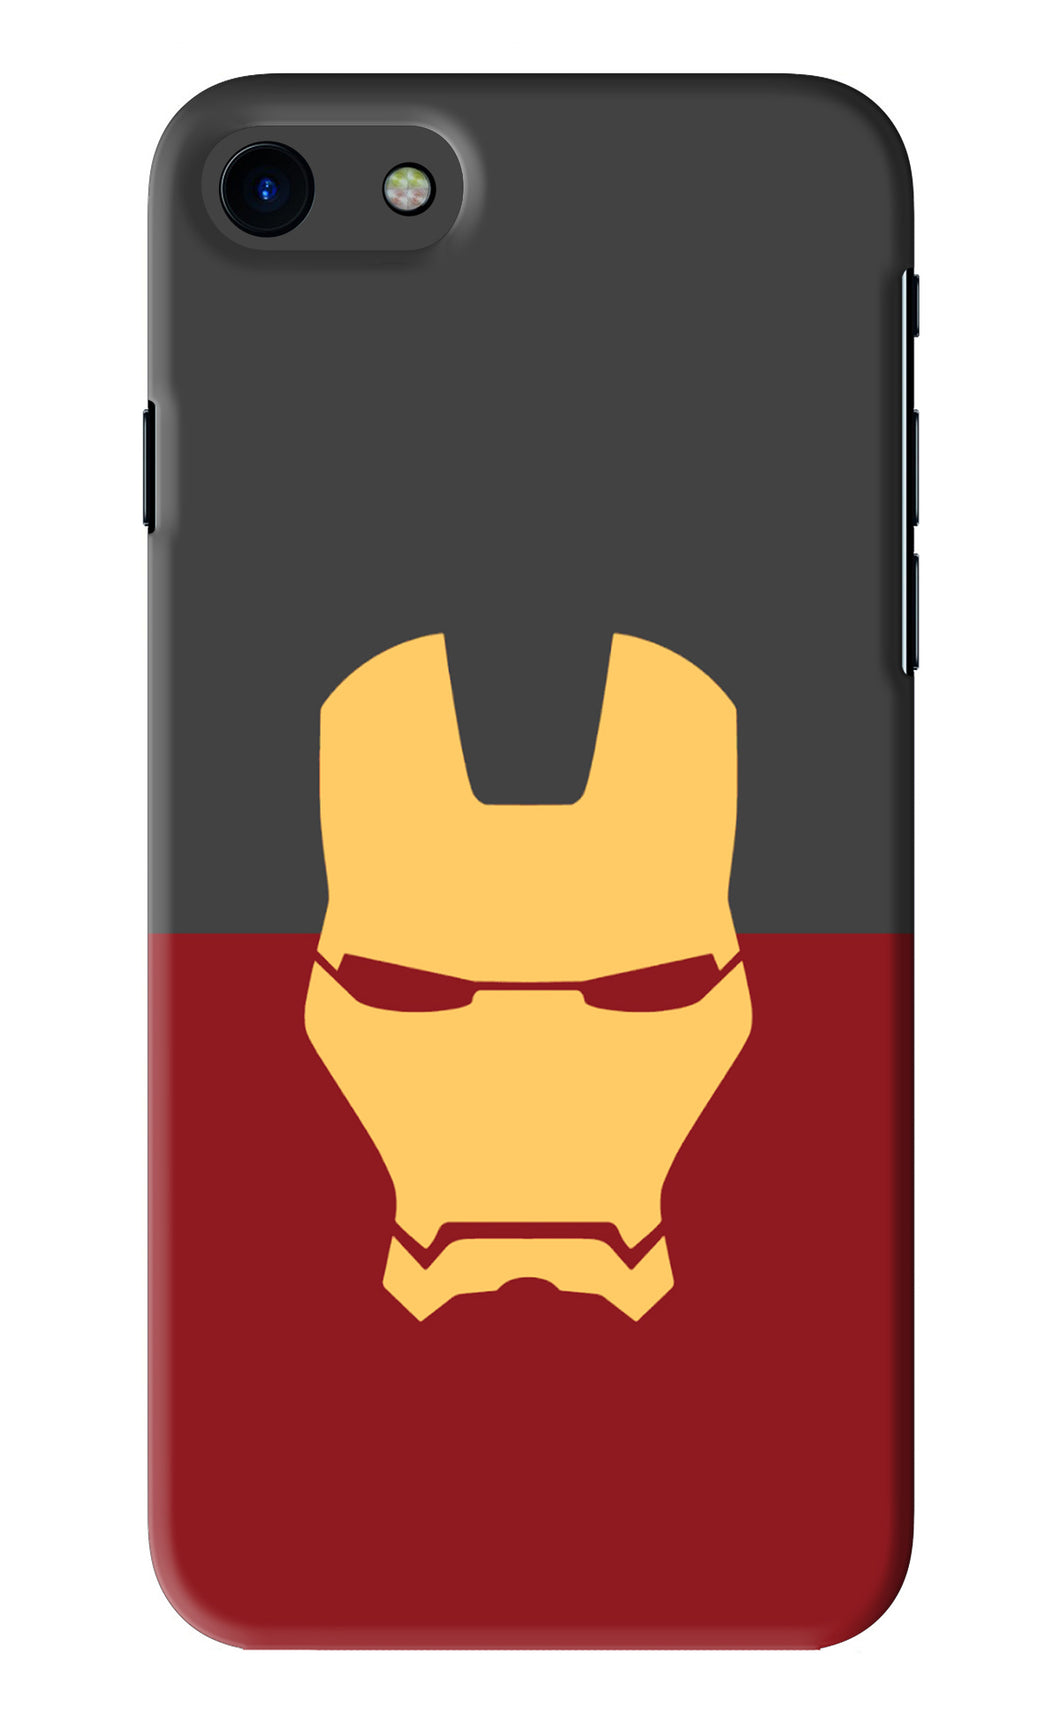 Ironman iPhone 8 Back Skin Wrap